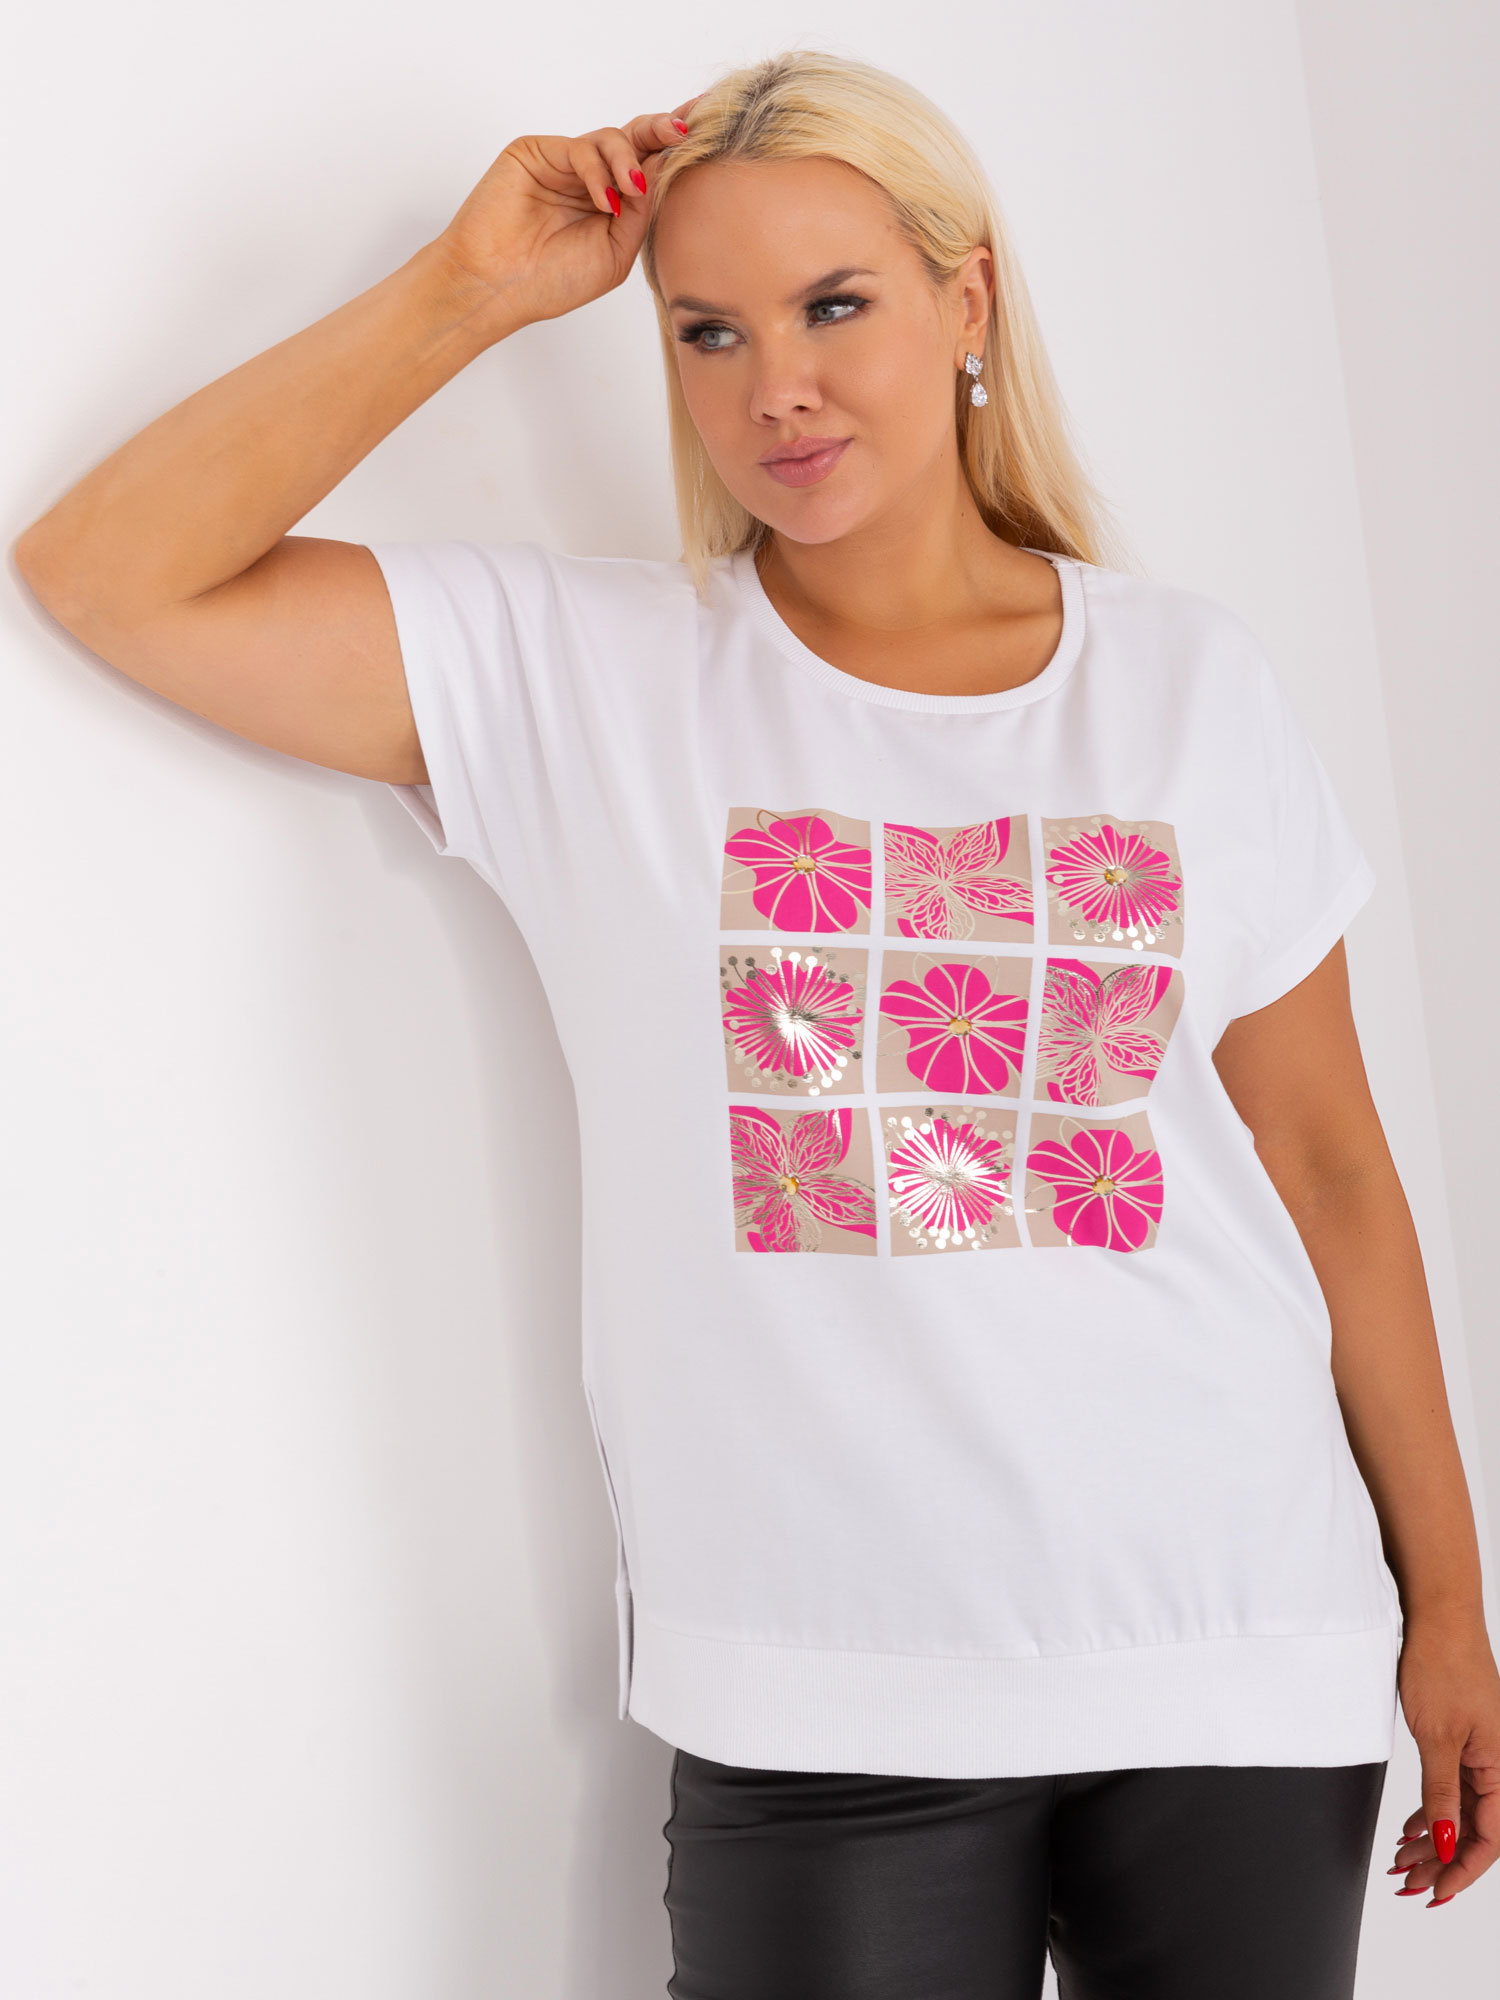 Lady's White-pink Cotton Blouse Plus Size